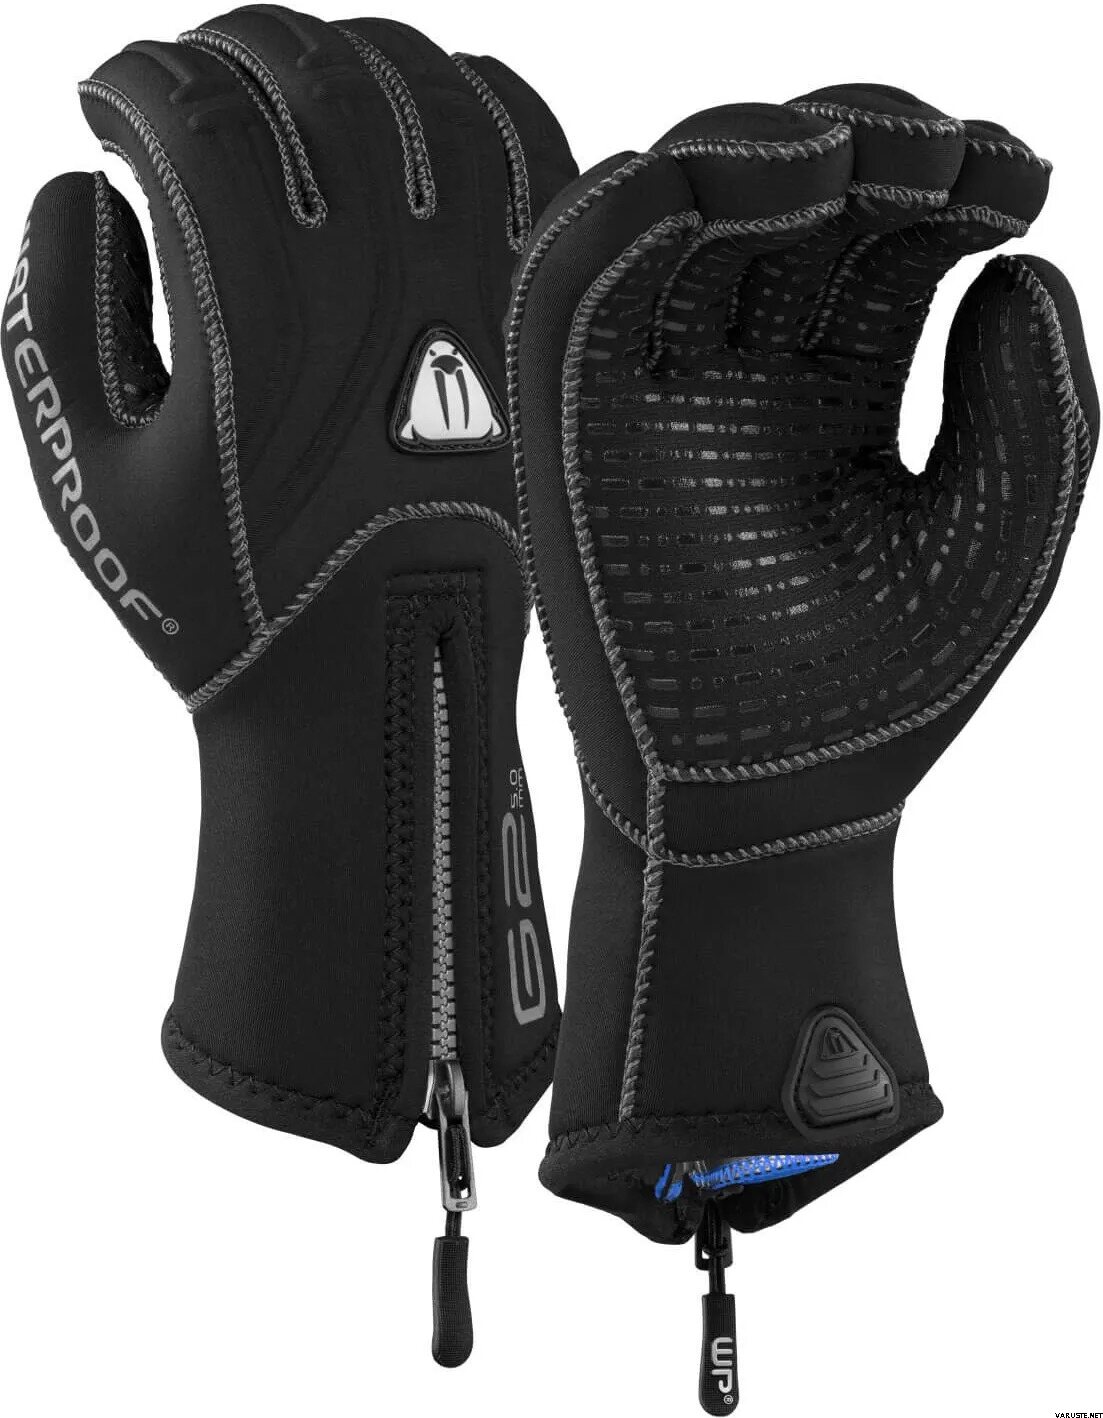 Waterproof G2 5mm 5-finger with Zipper, Neoprene gloves